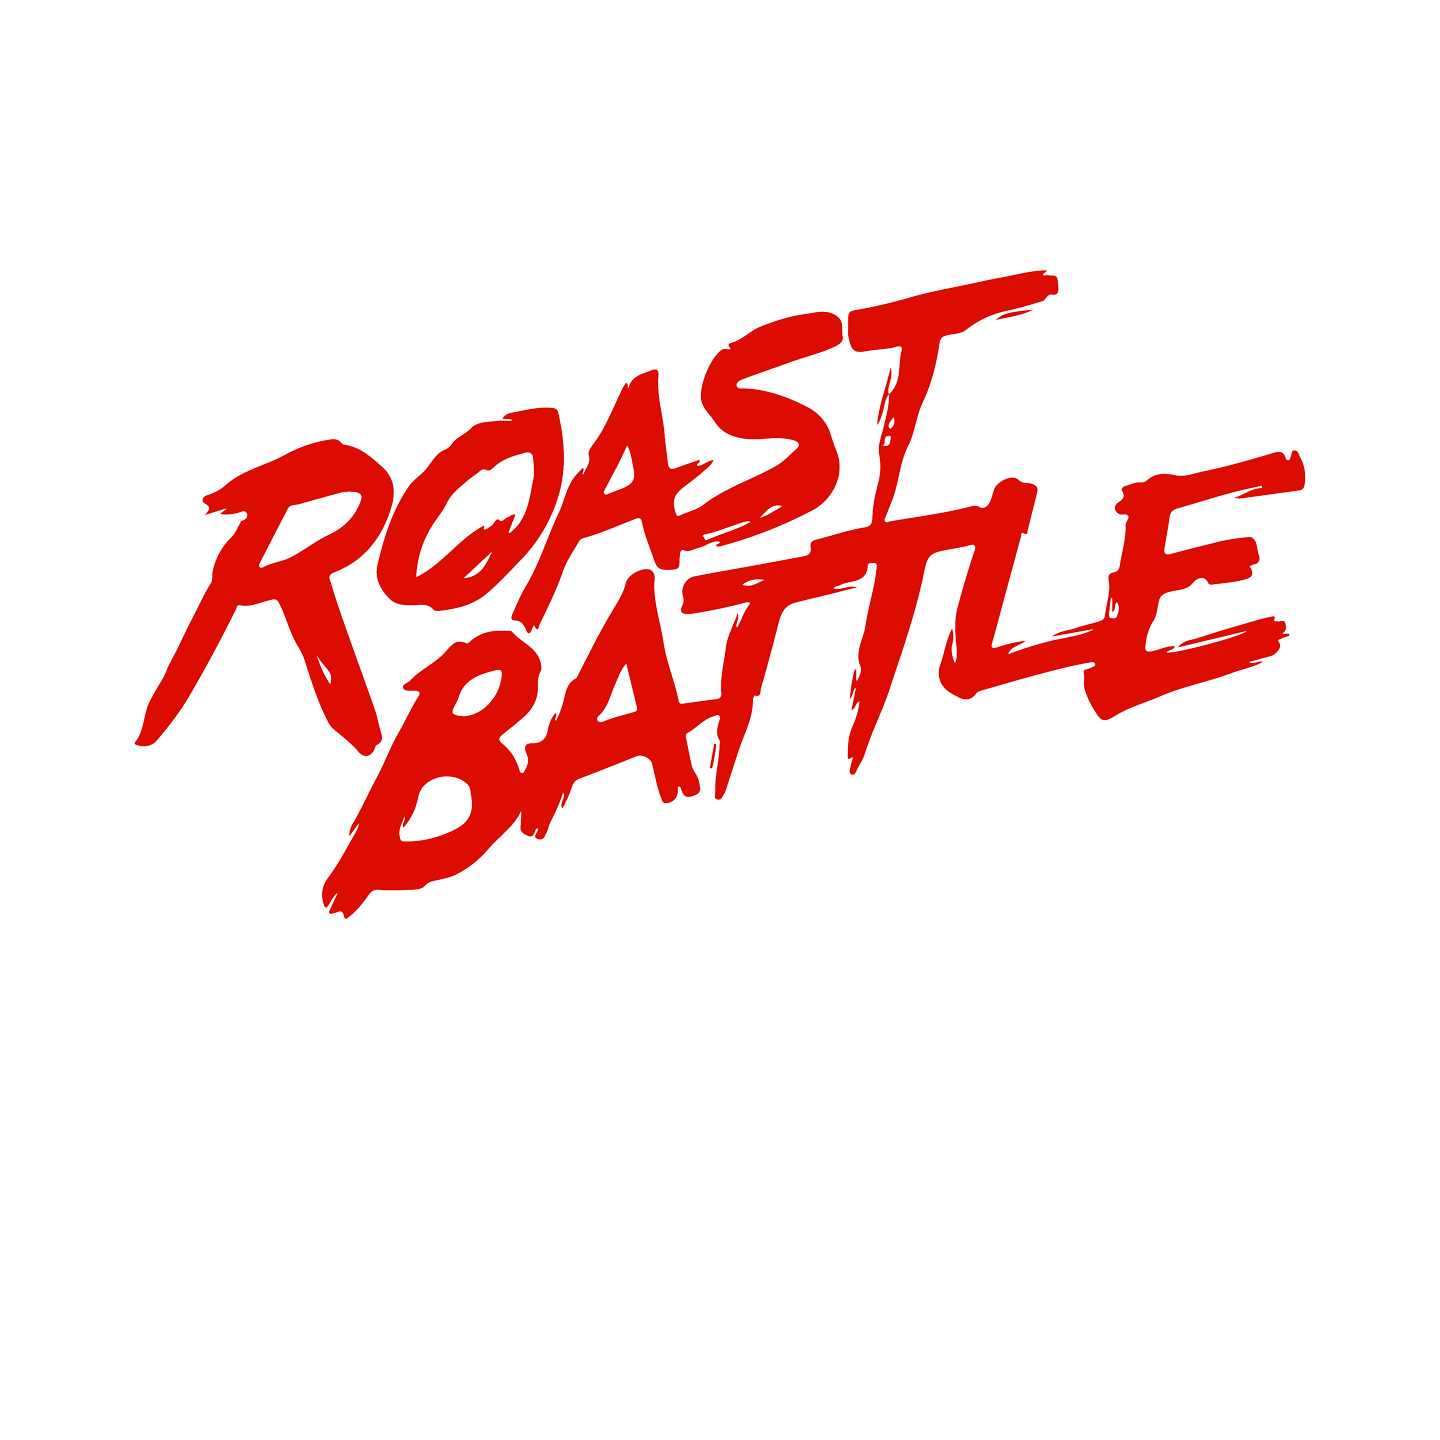 Roast Battle Chicago